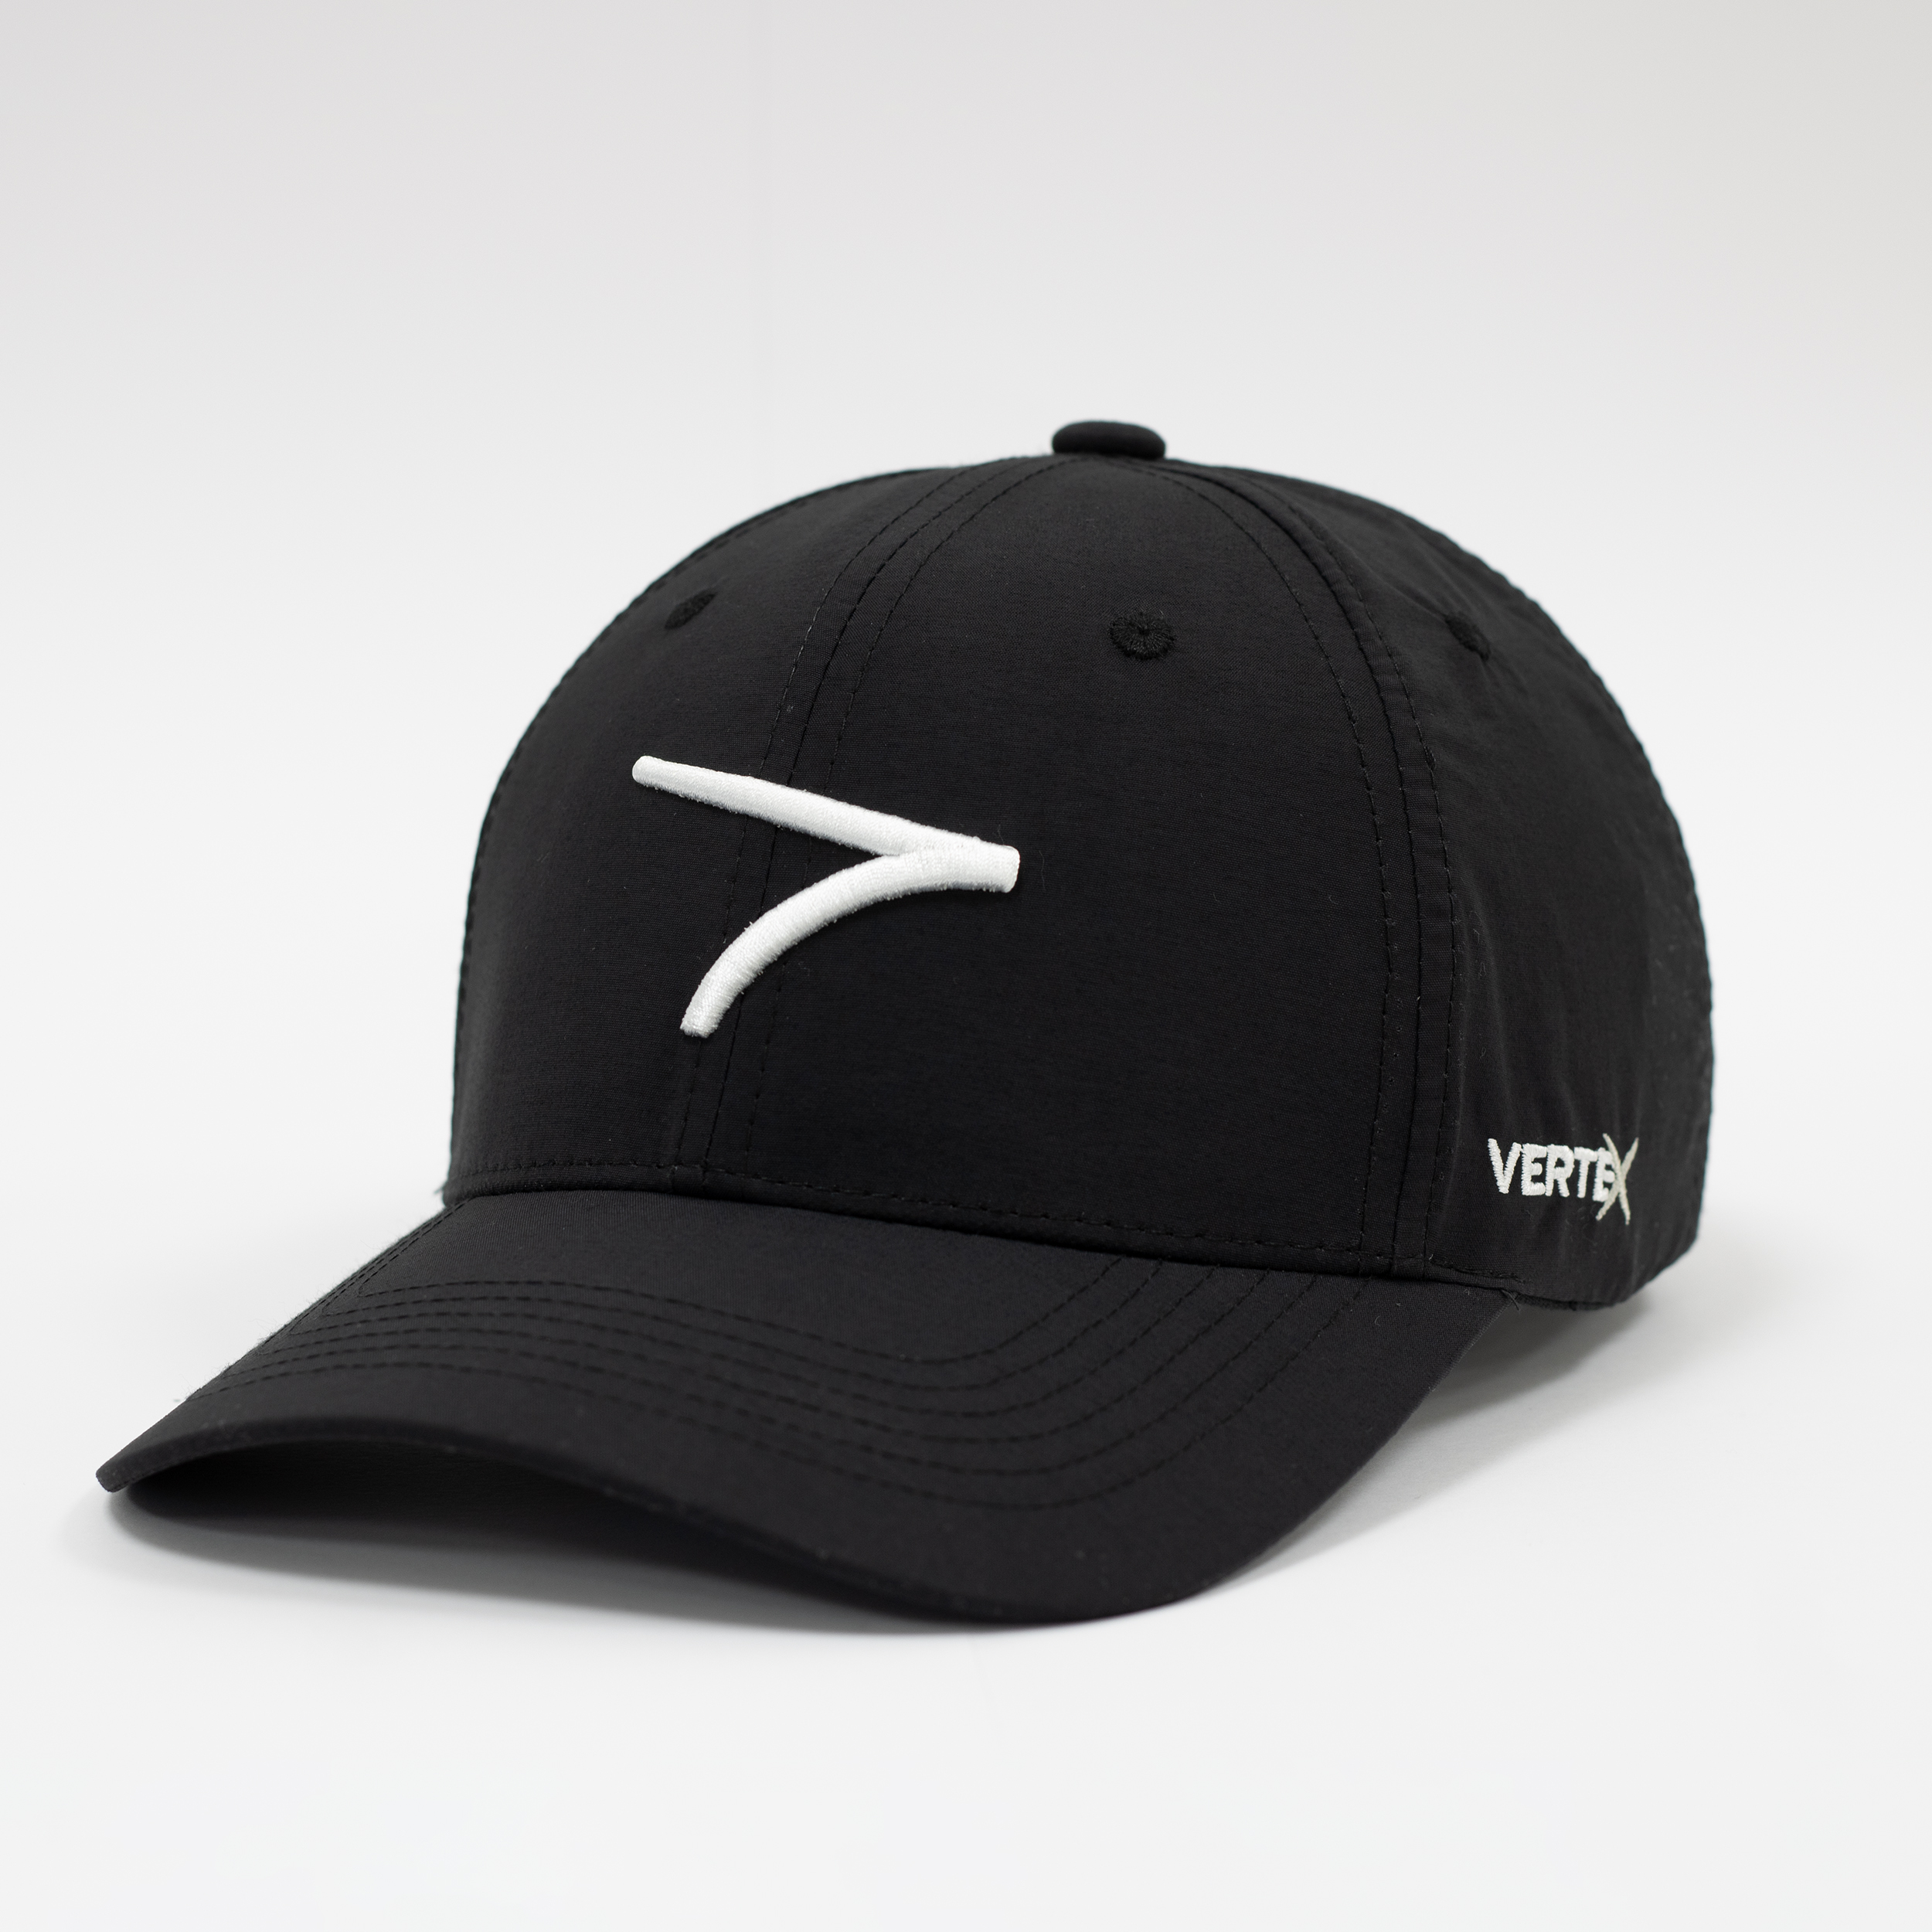 Fable Vertex Golf Cap Front - Black